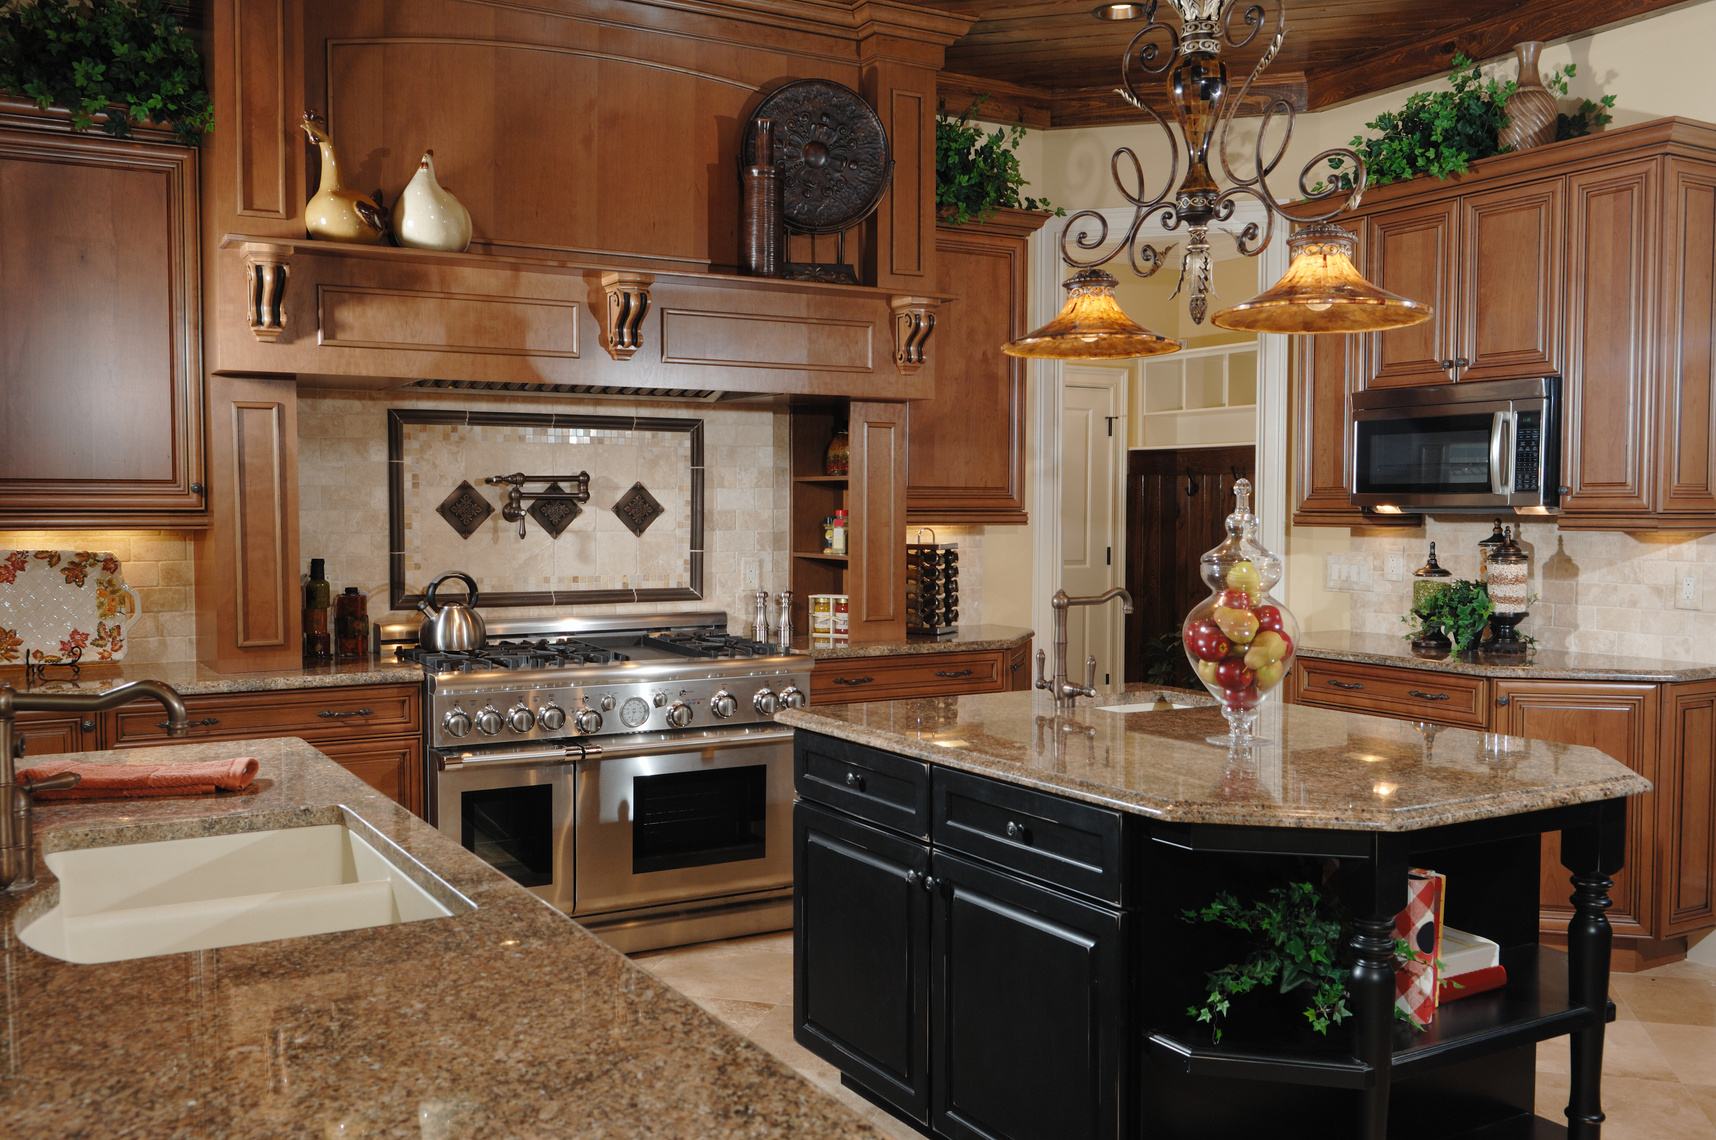 Beautiful luxury kitchen with granite countertops